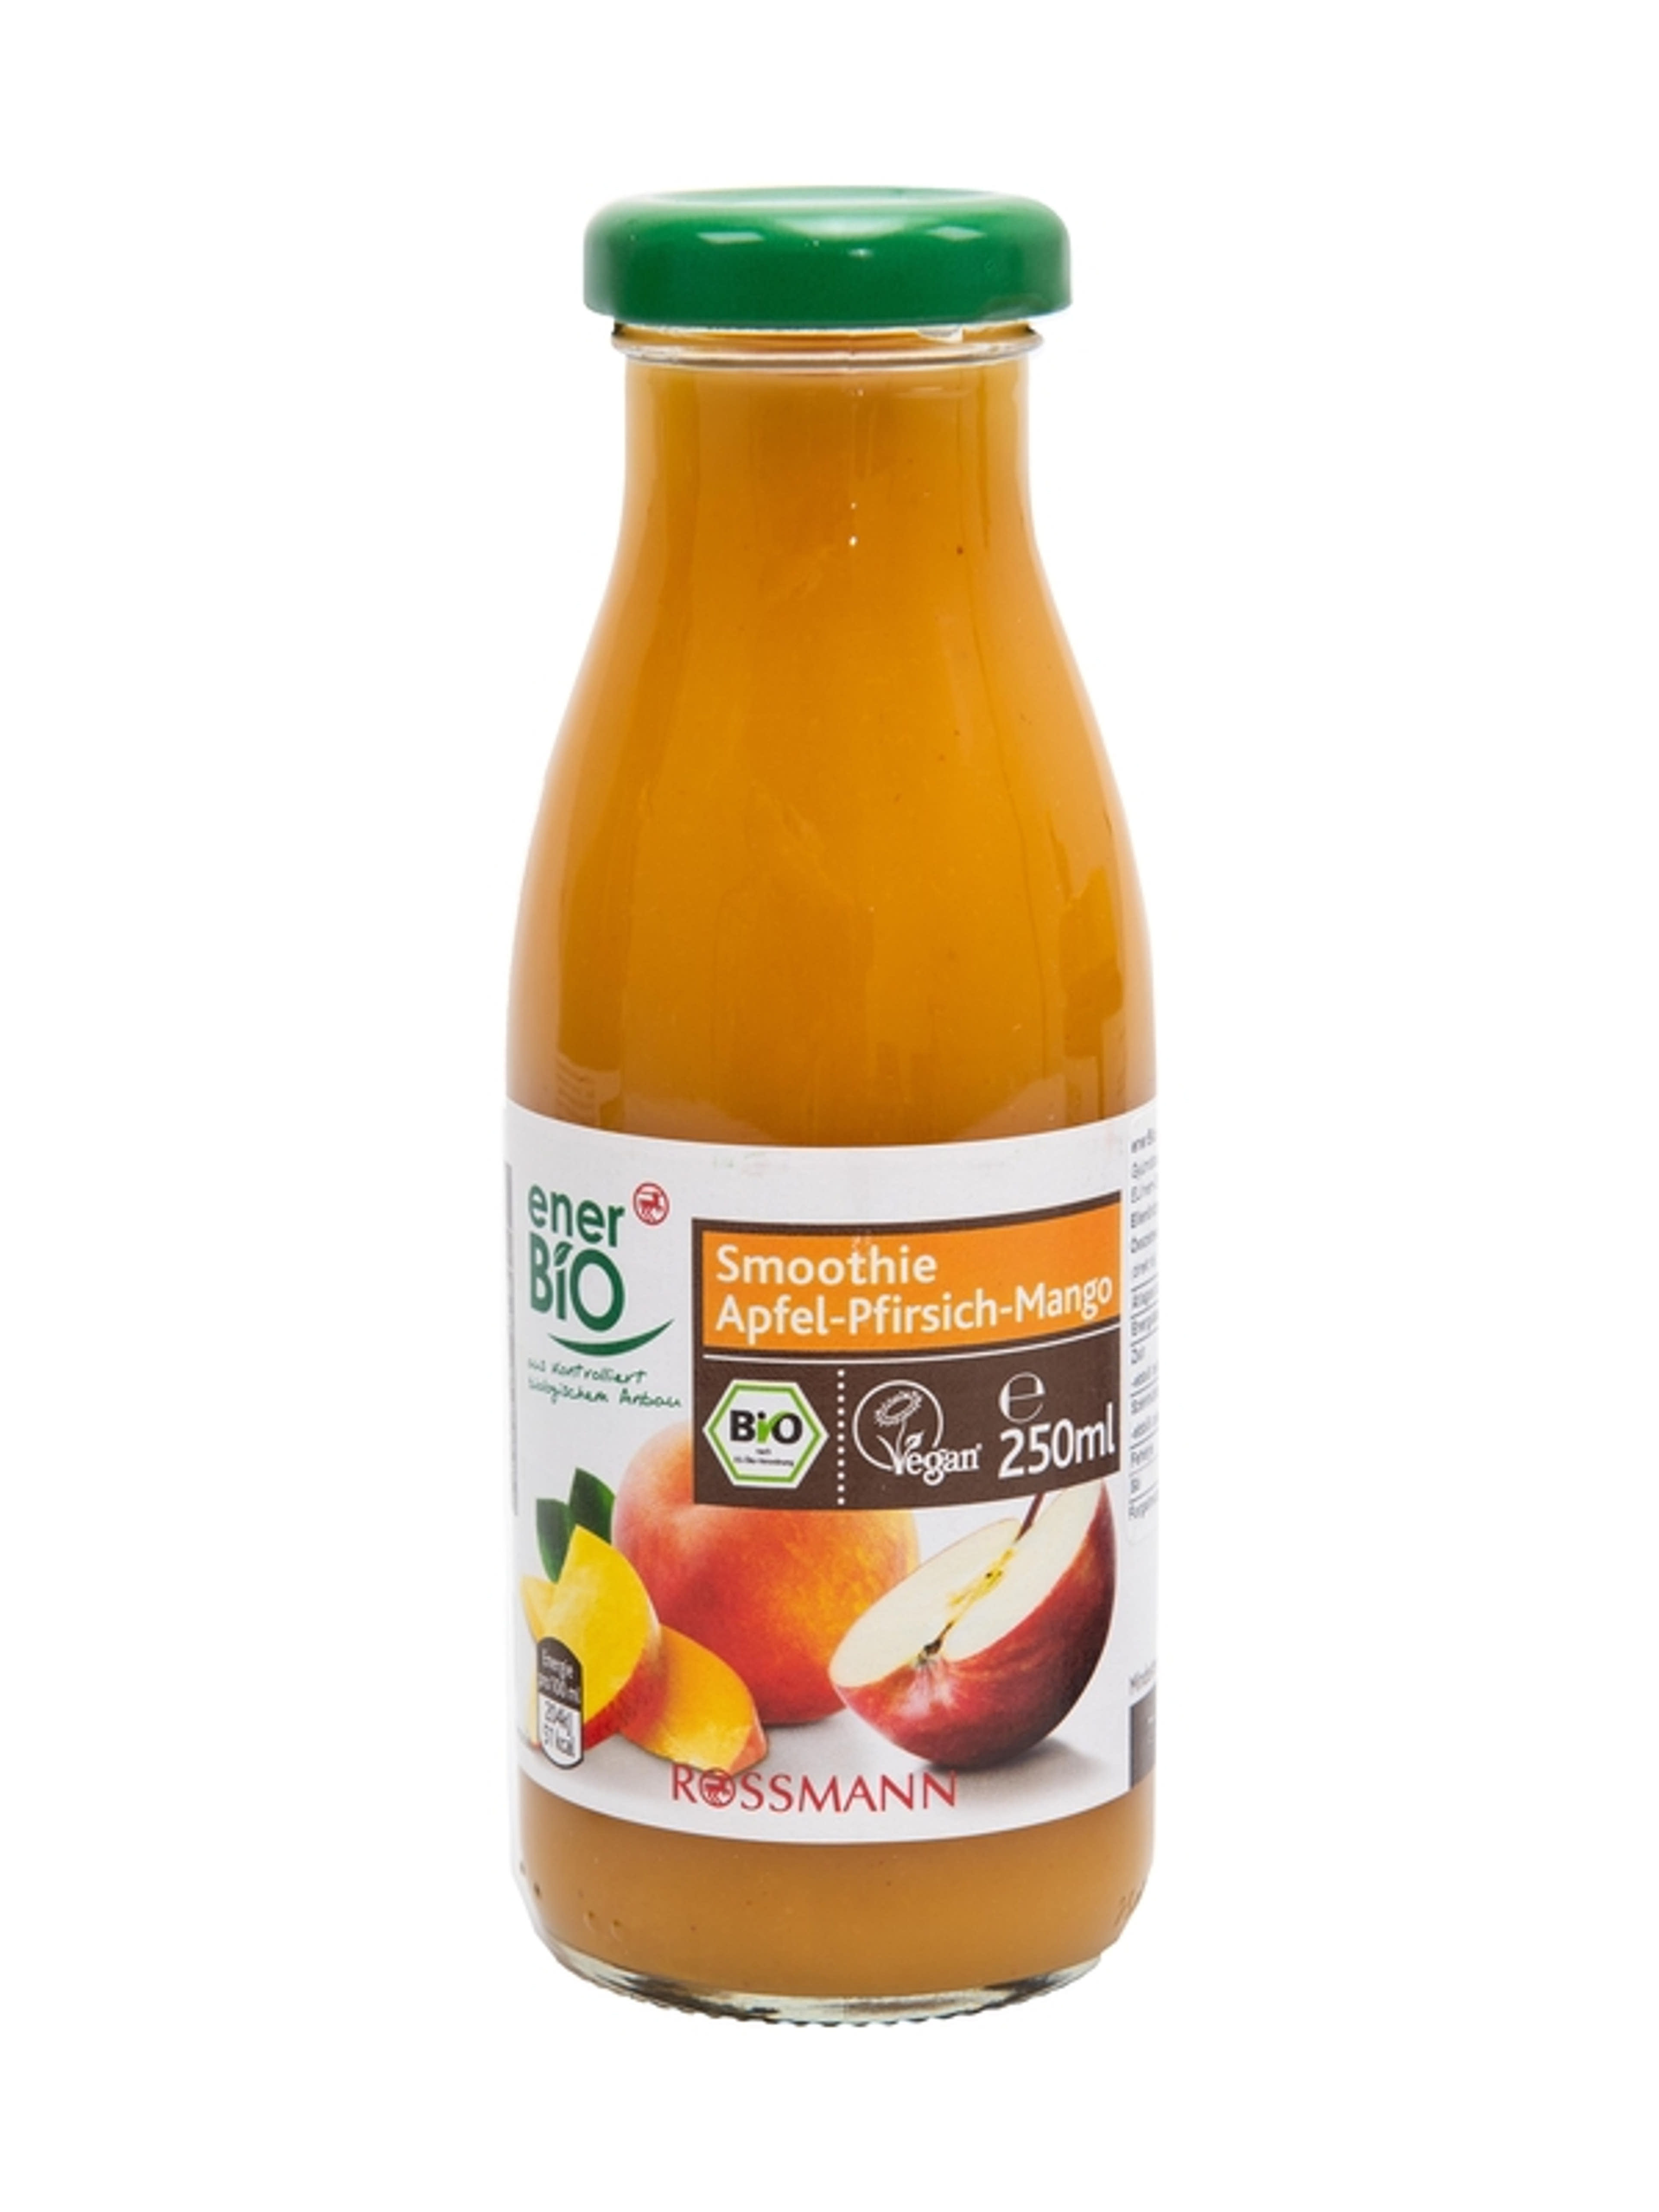 Ener-bio smoothie napkelte (alma-barack-mangó) - 250 ml-1